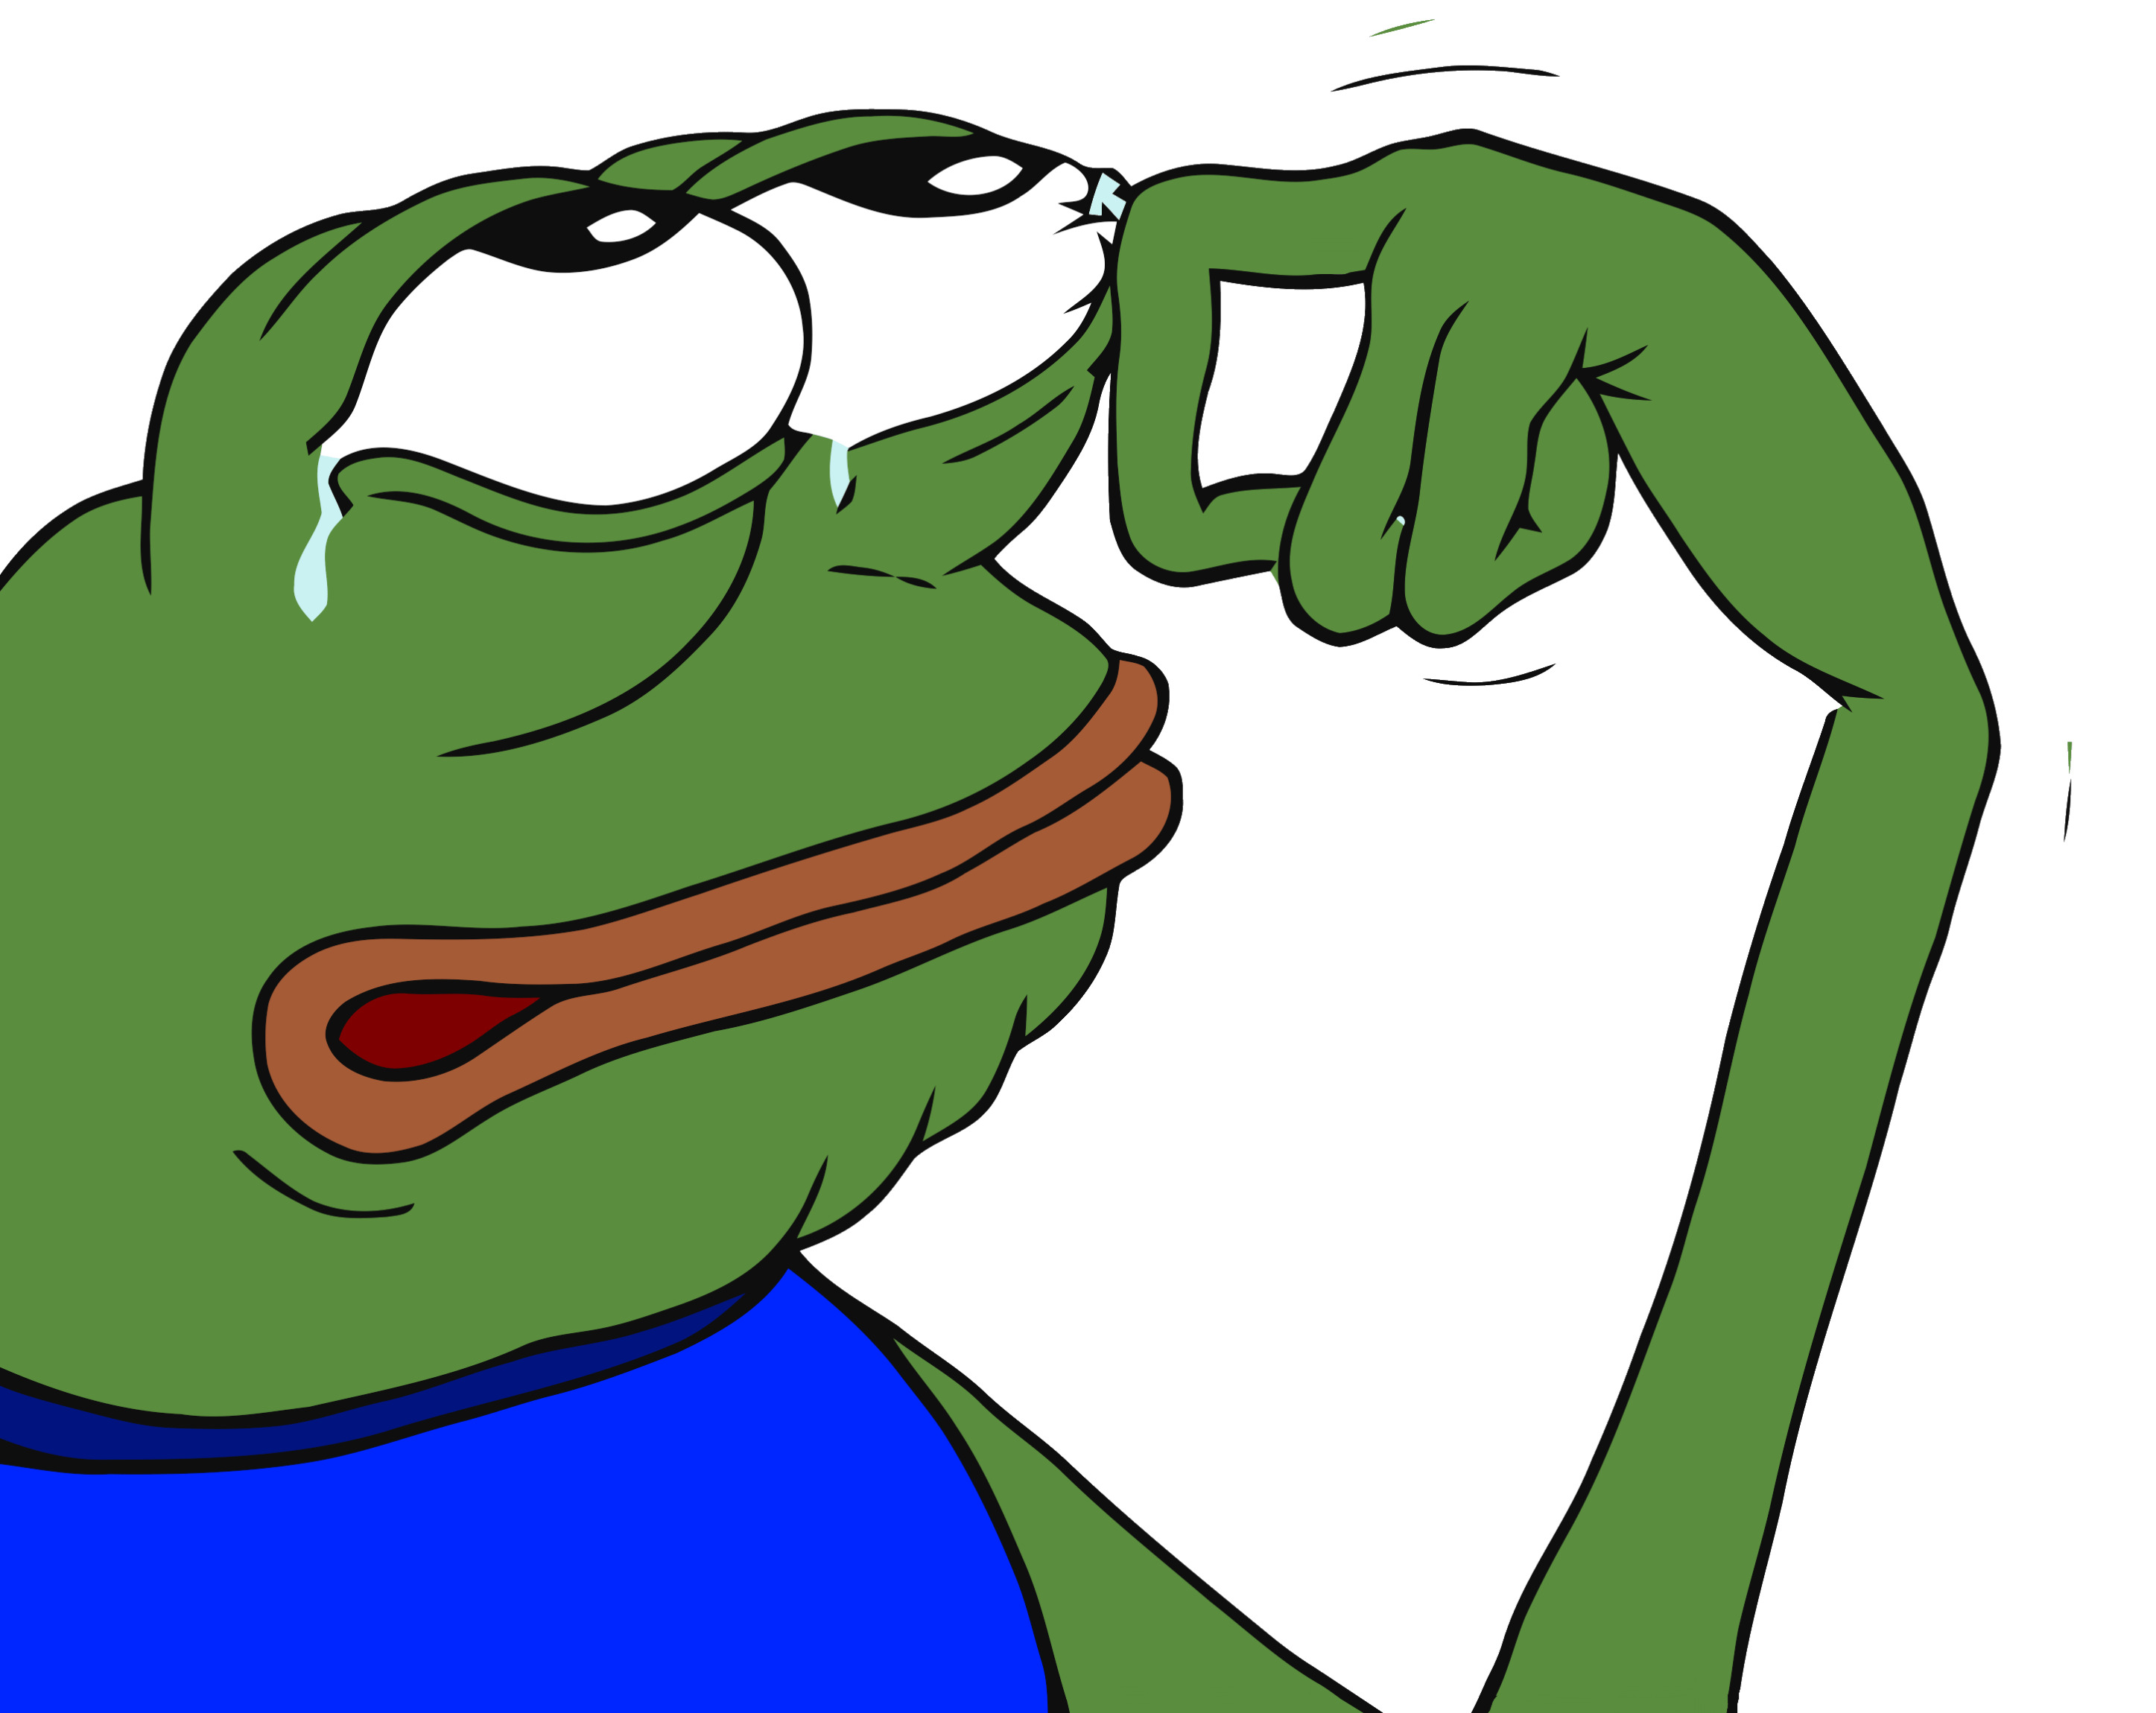 Crying Pepe icons